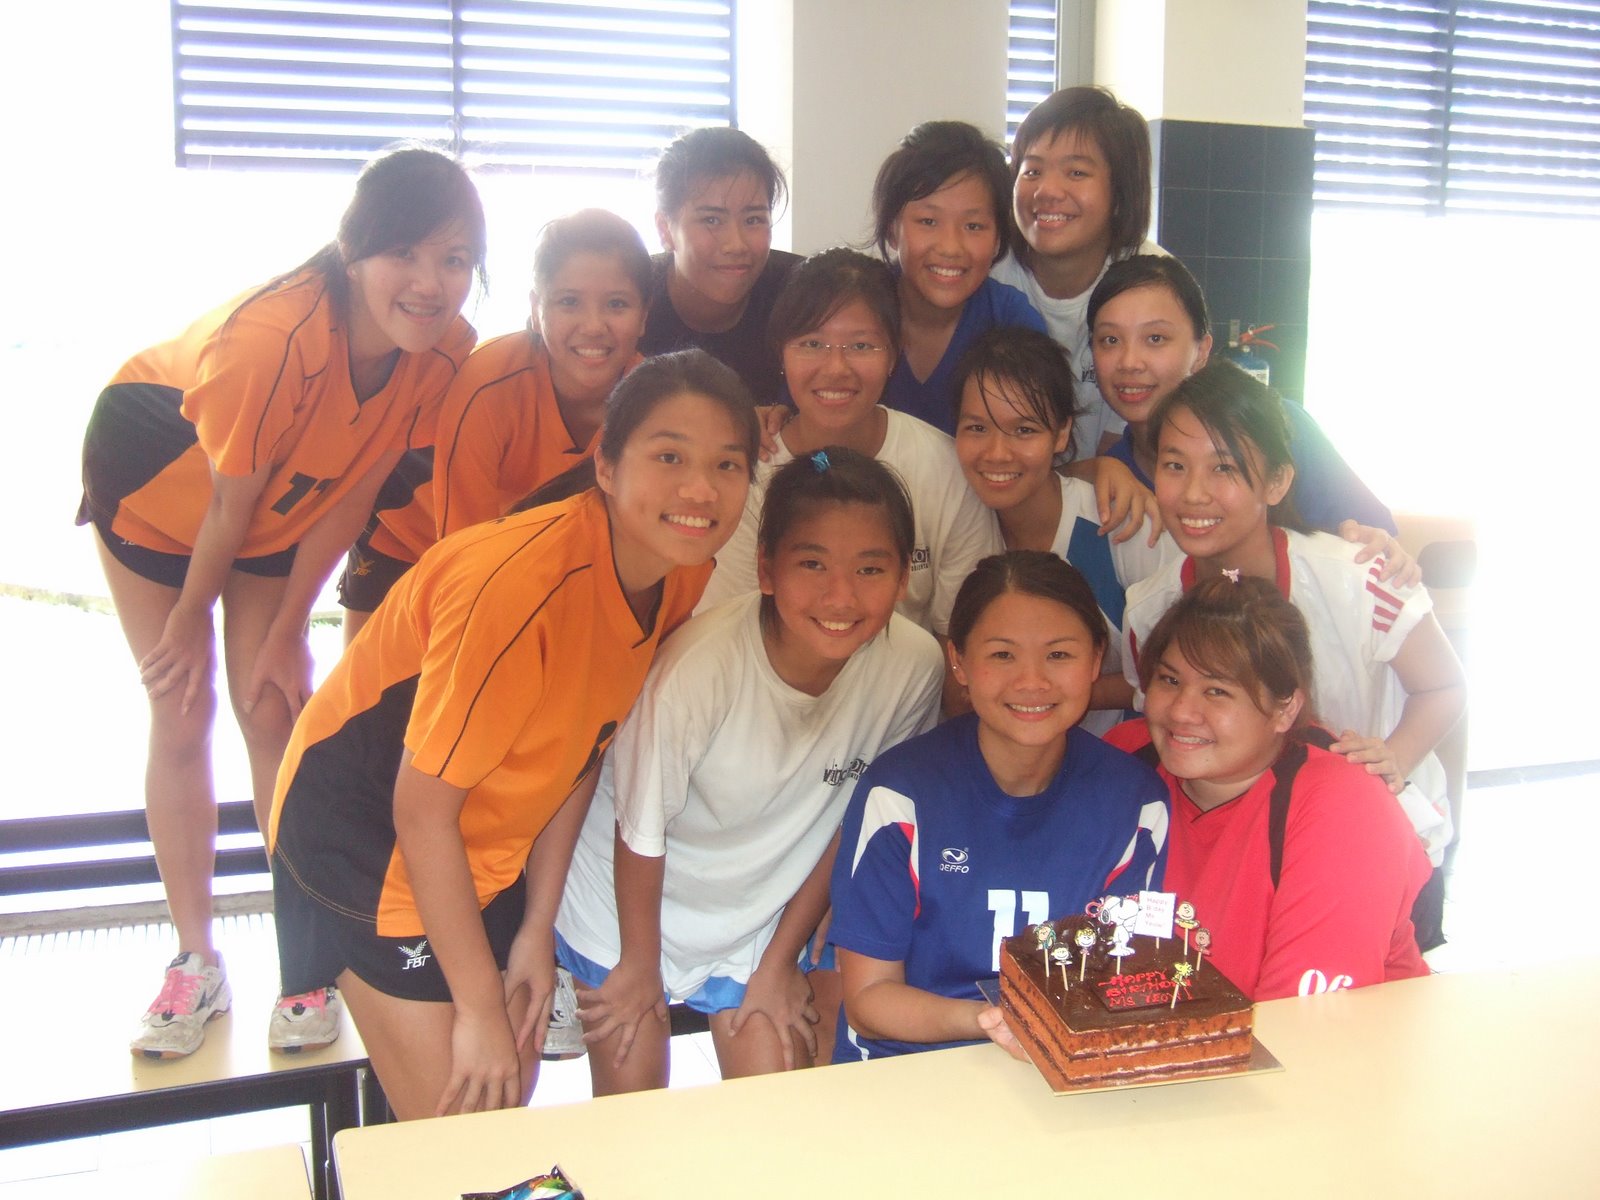 [Ms+Yeow's+Birthday.JPG]